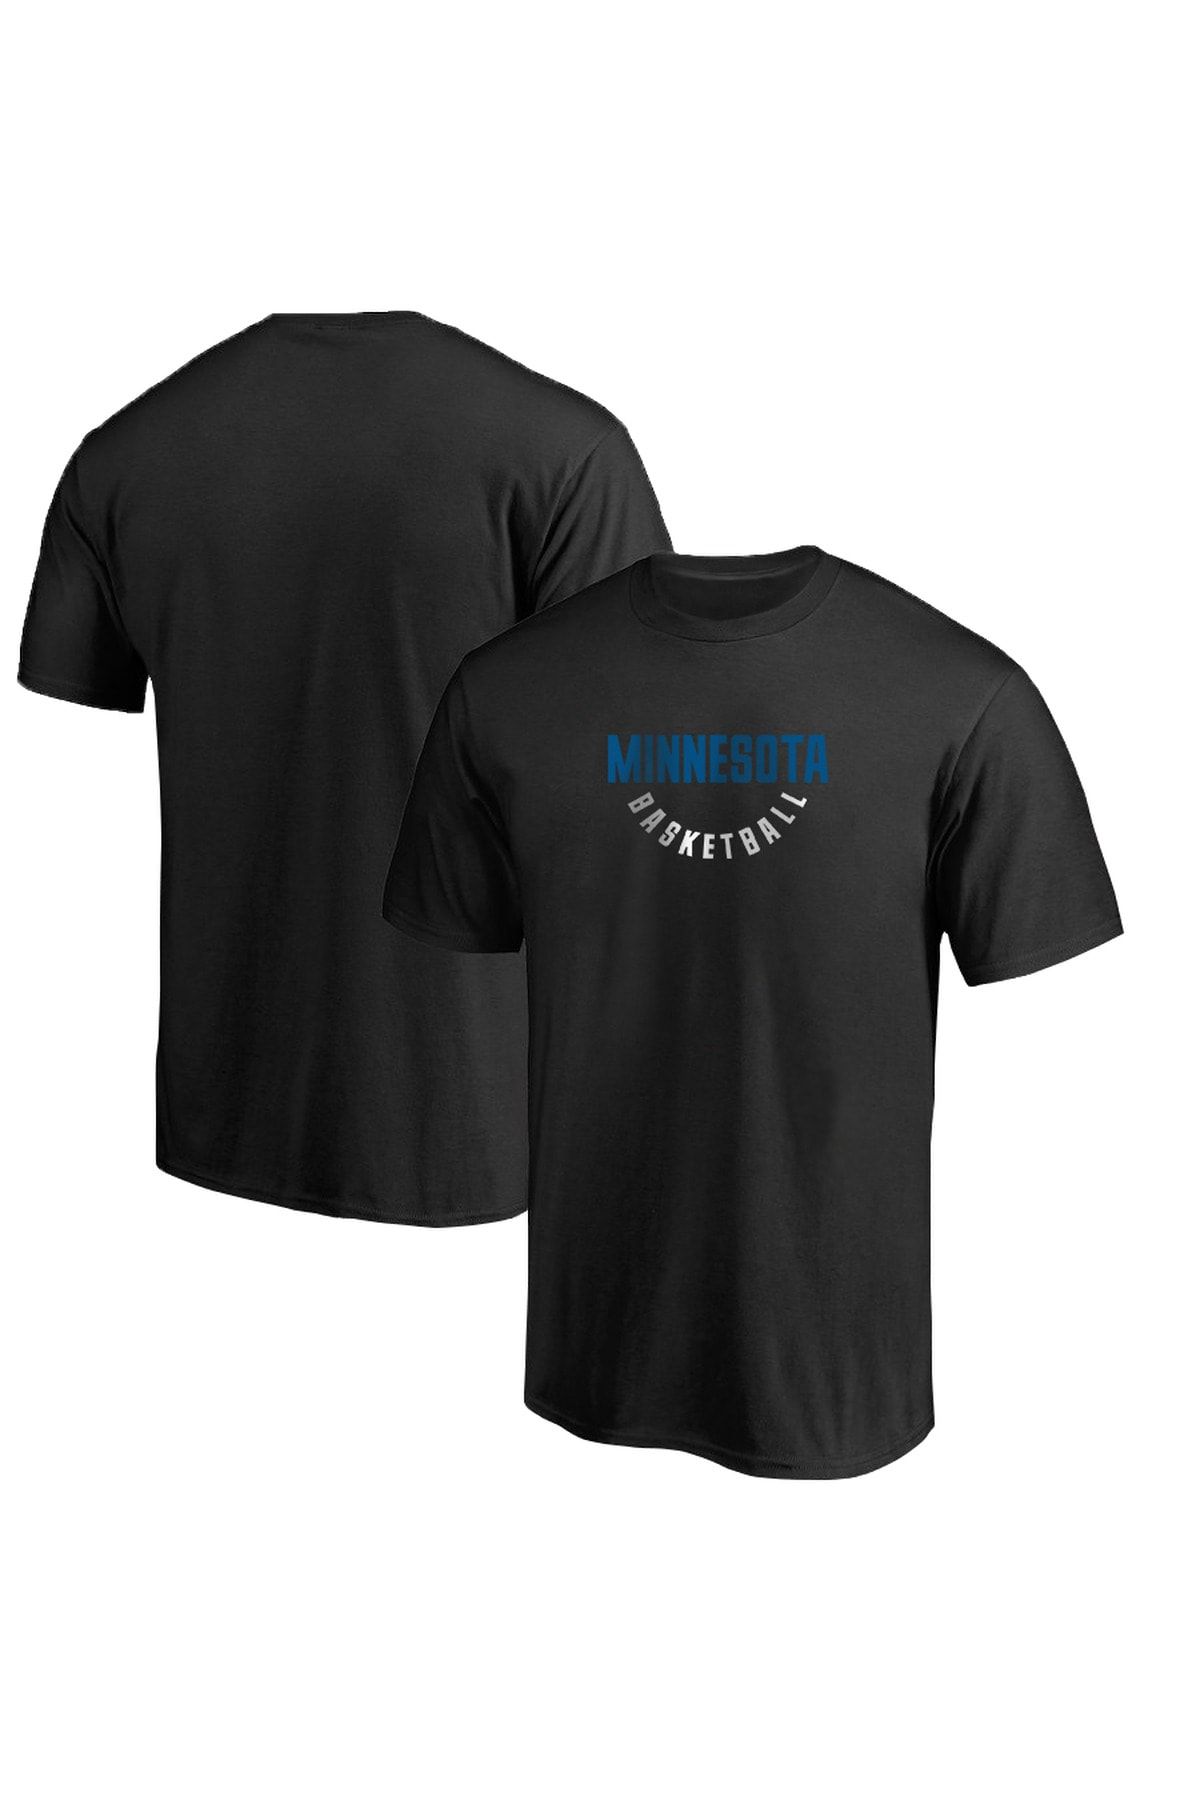 Usateamfans Minnesota Tshirt